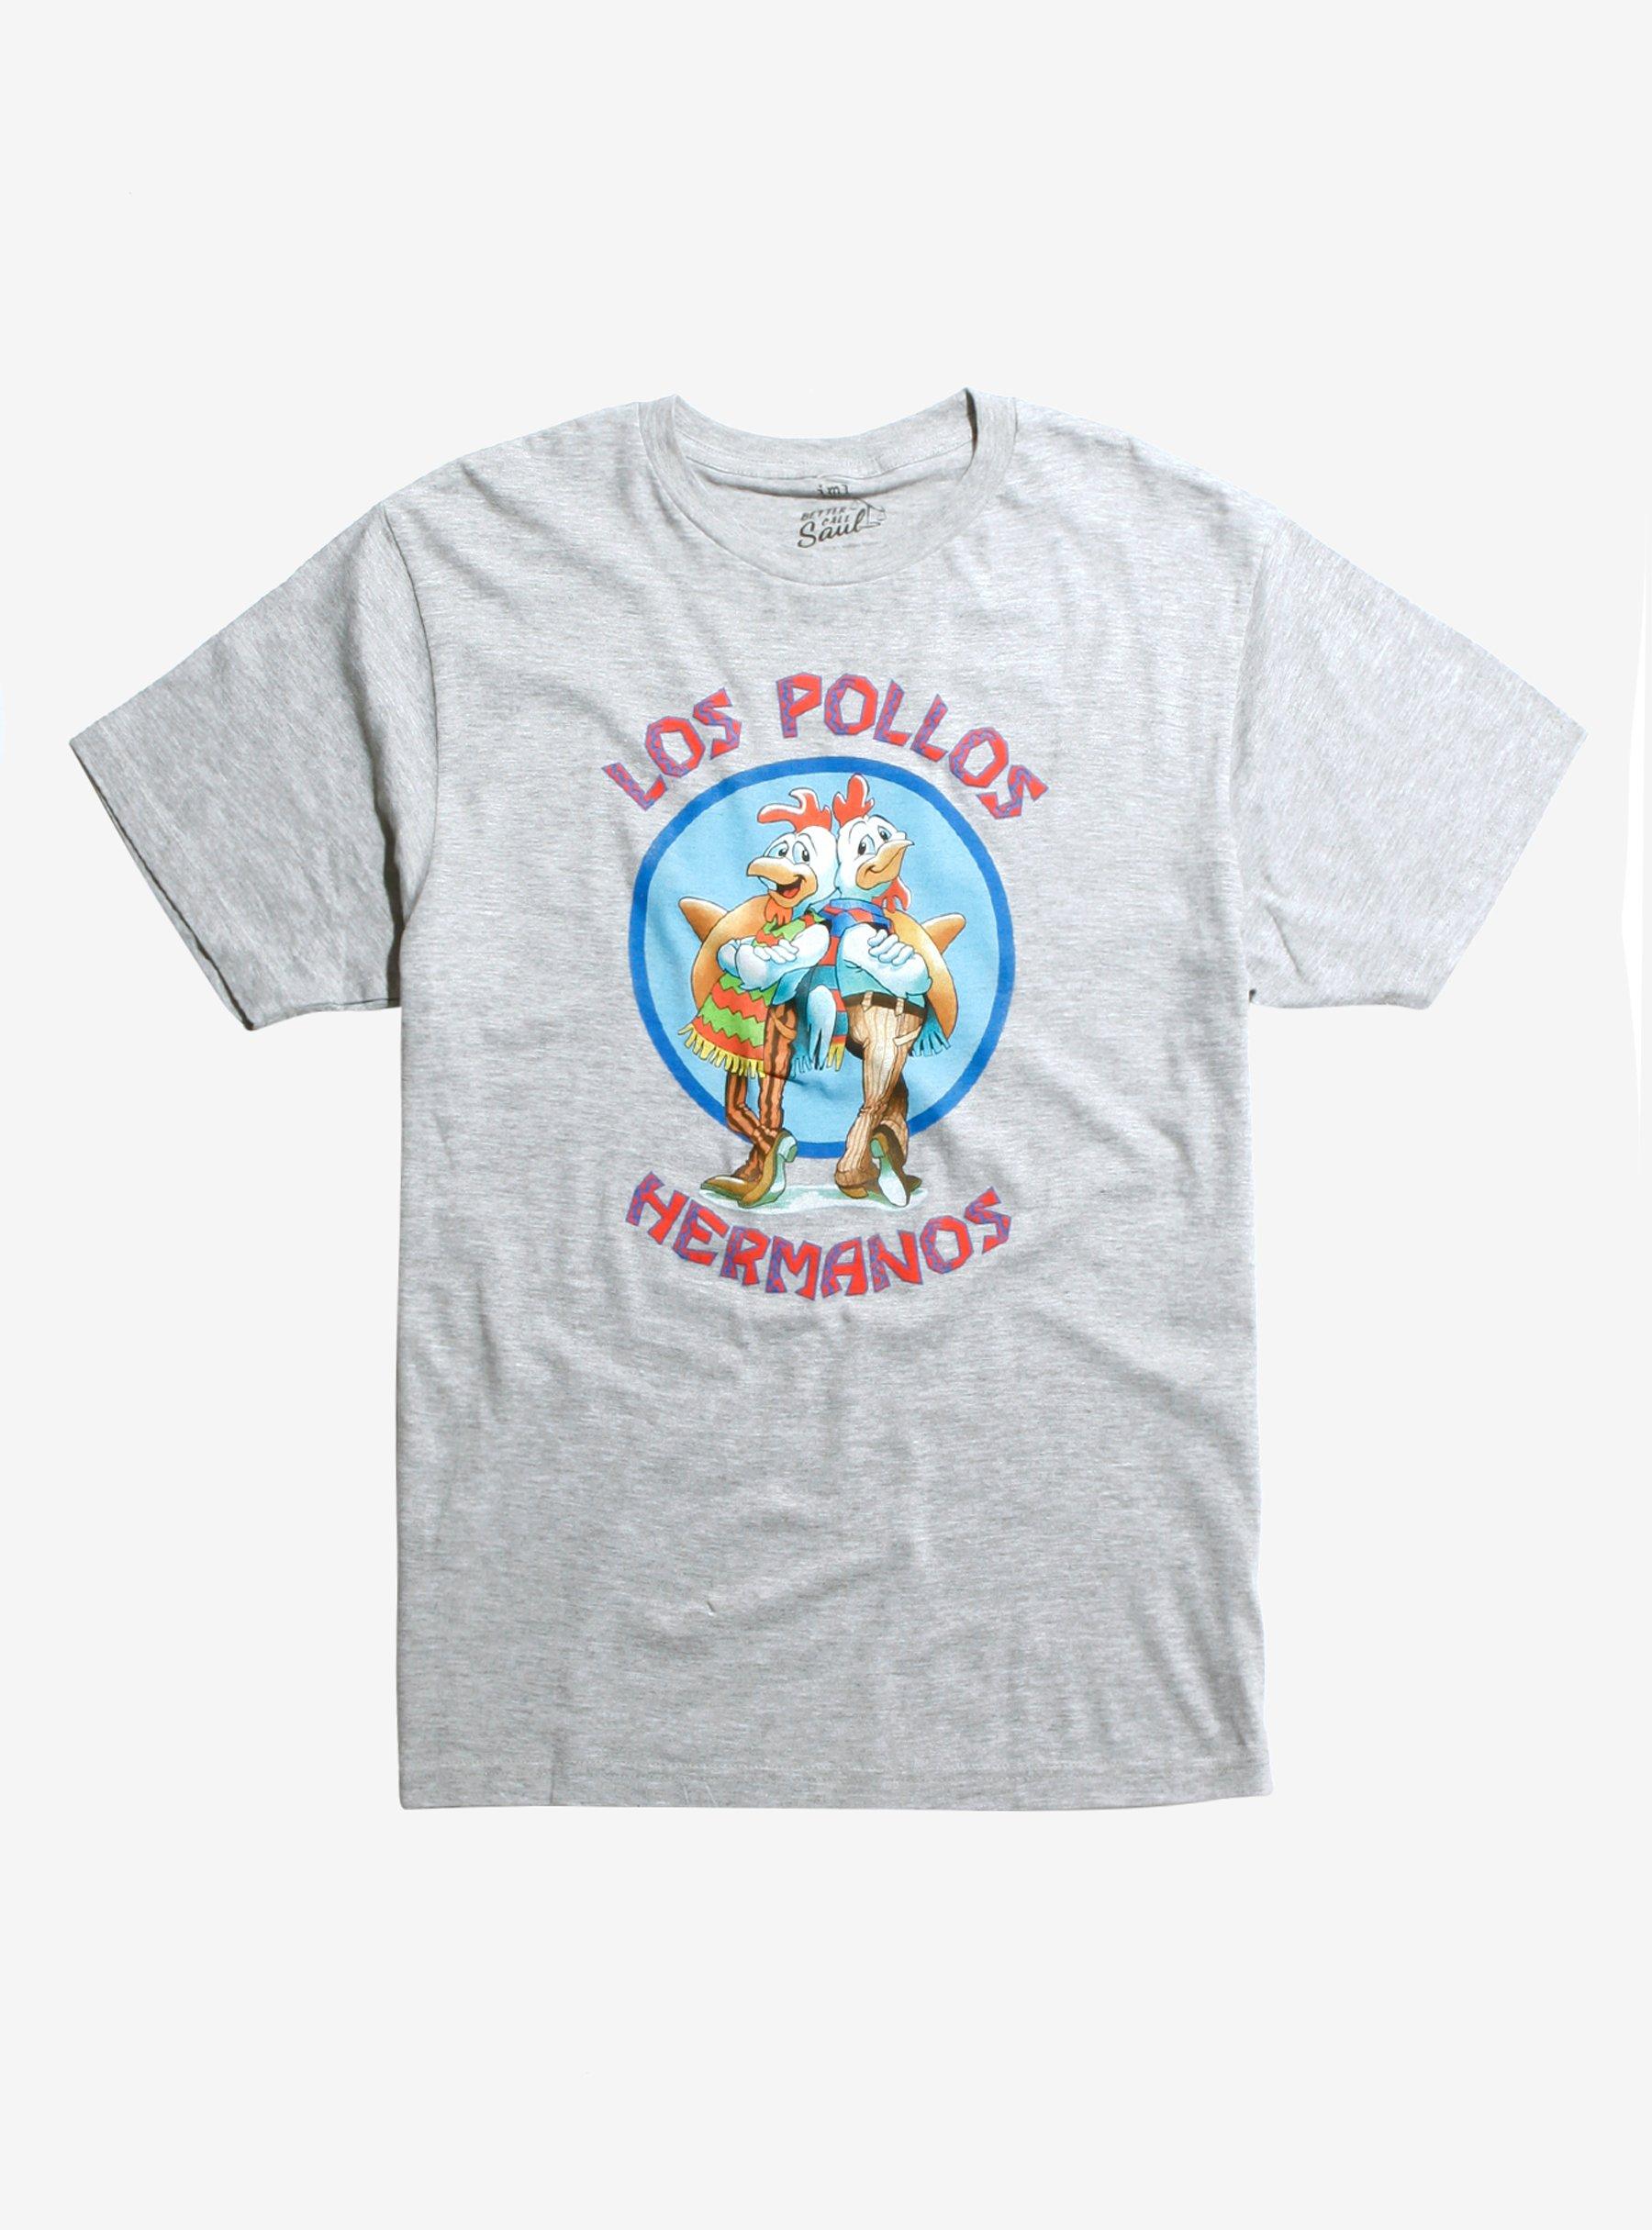 Better Call Saul Los Pollos Hermanos T-Shirt, GREY, hi-res